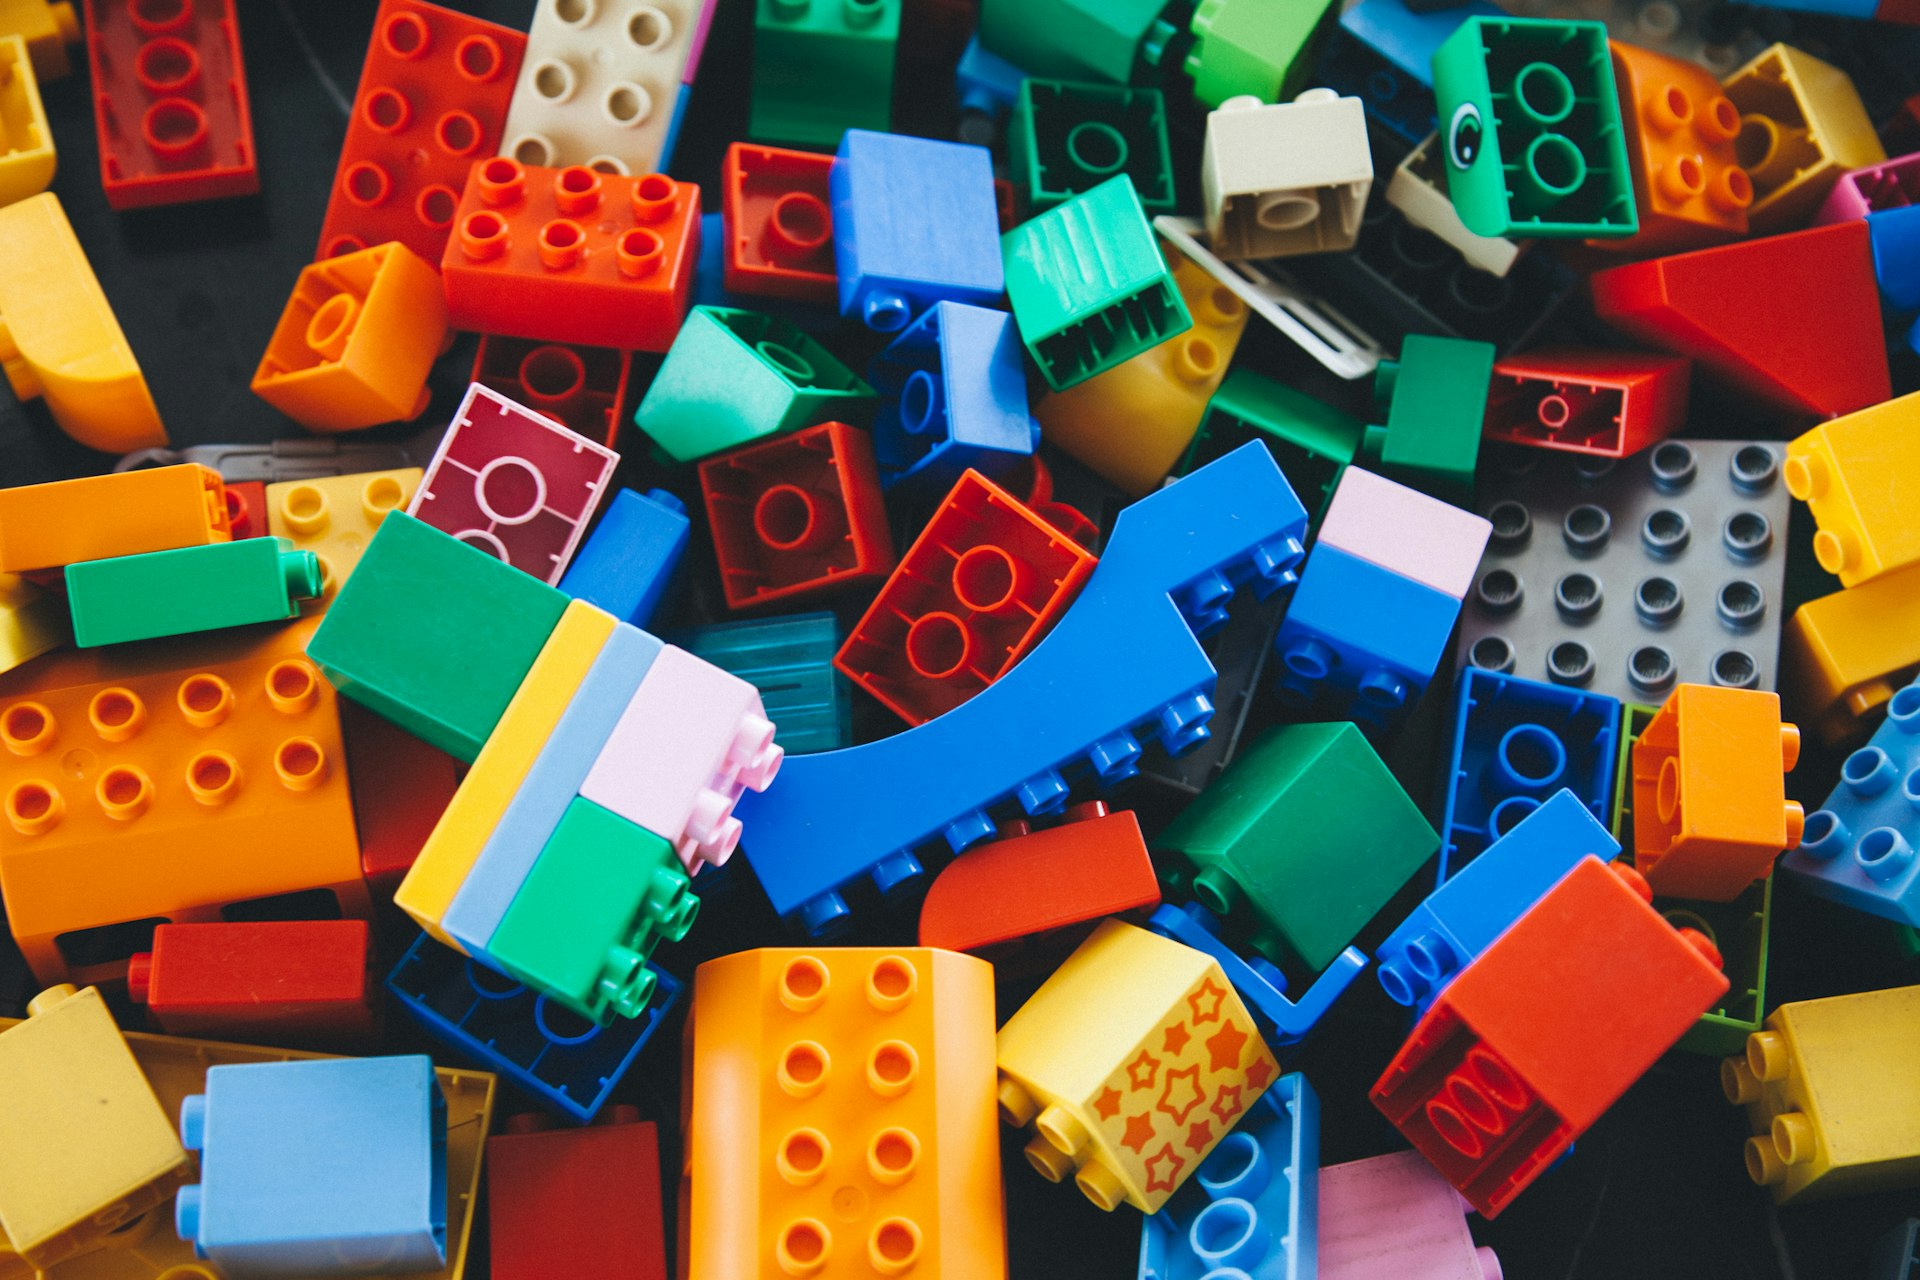 Lego Building Bricks and Blocks